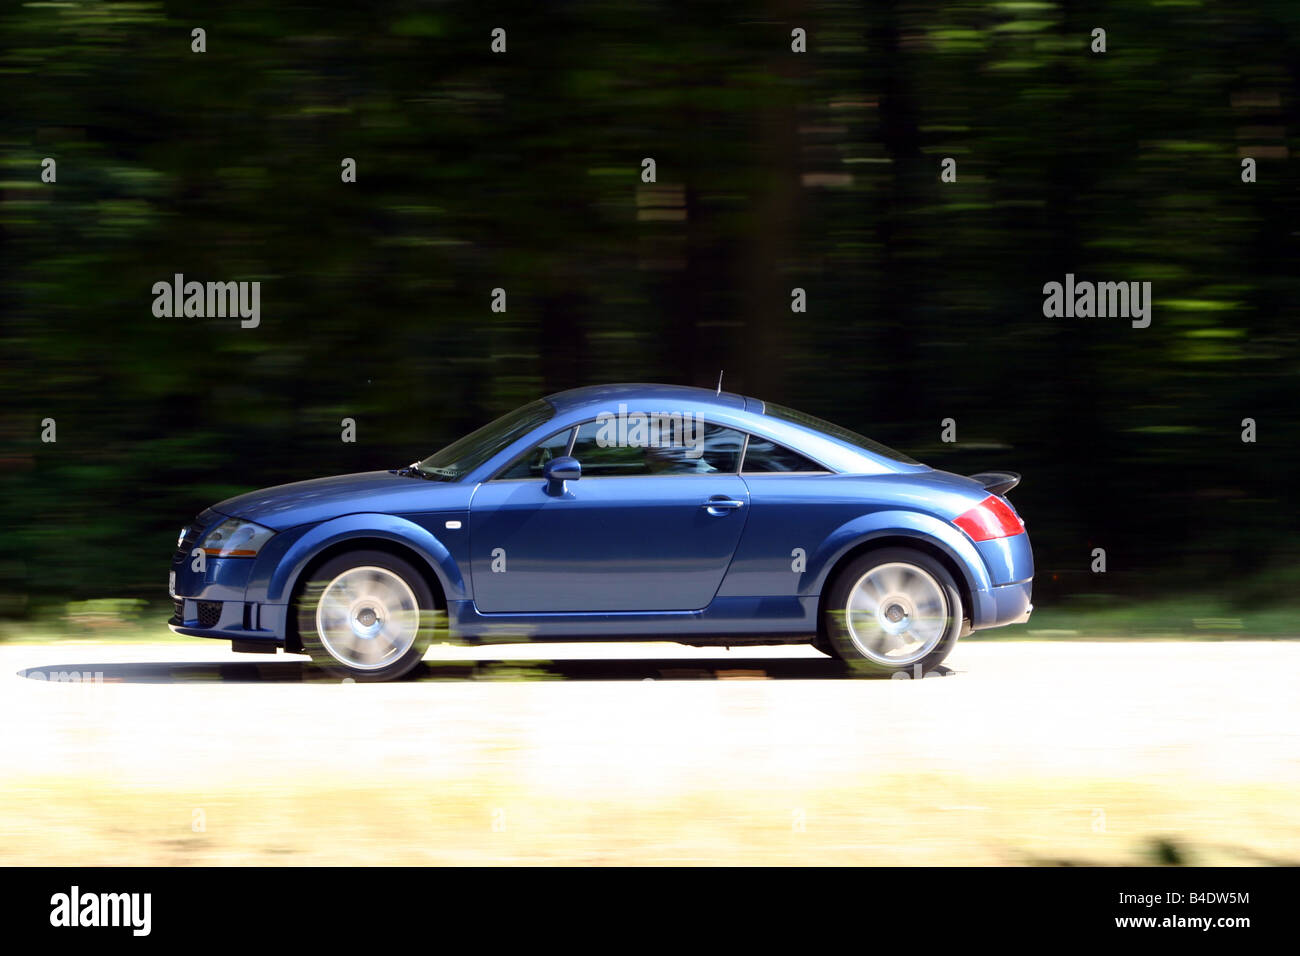 Auto, Audi TT 3.2, Coupe, Roadster, Baujahr 2003-blau bewegt